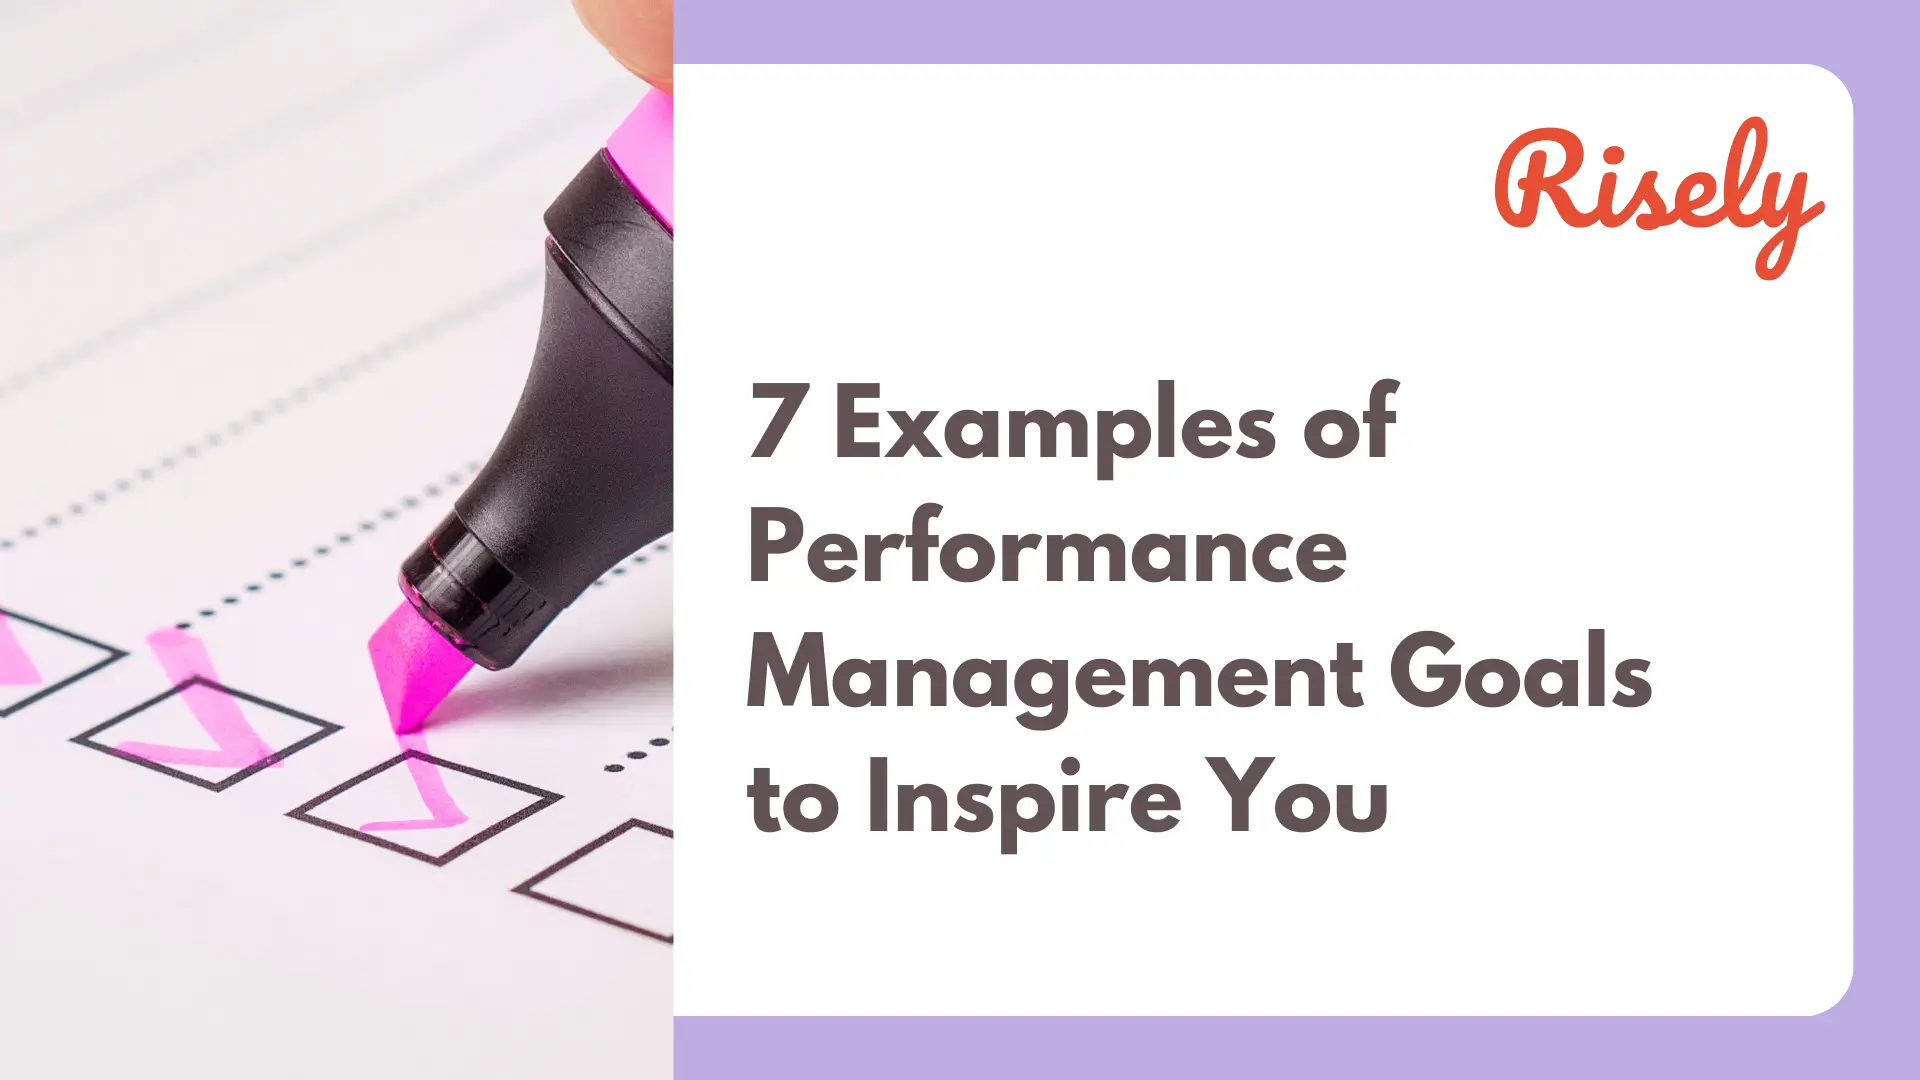 Performance Management Goals